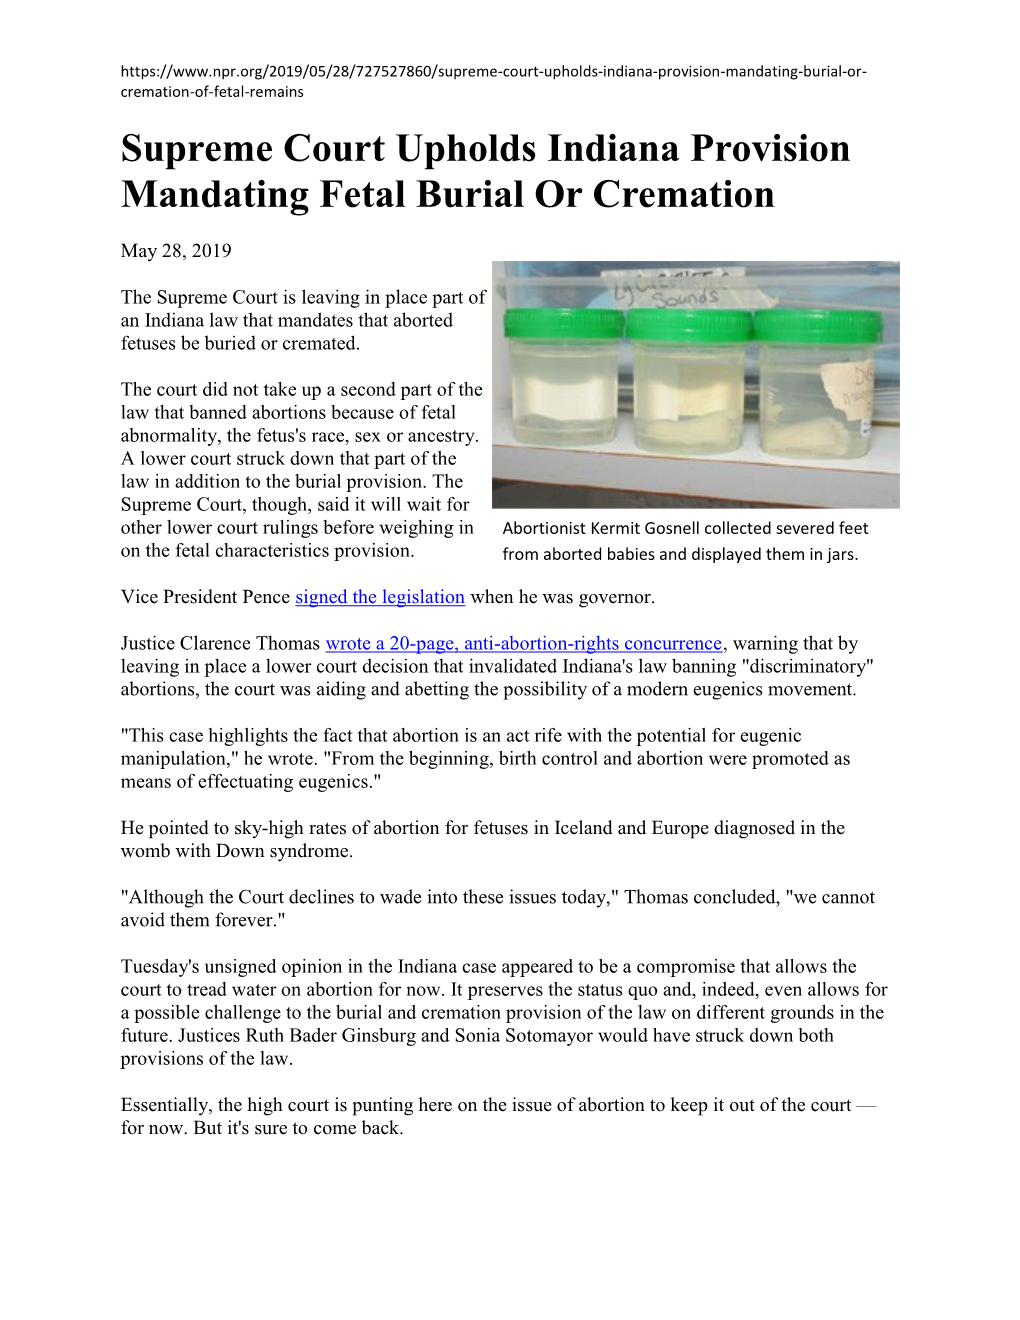 Supreme Court Upholds Indiana Provision Mandating Fetal Burial Or Cremation